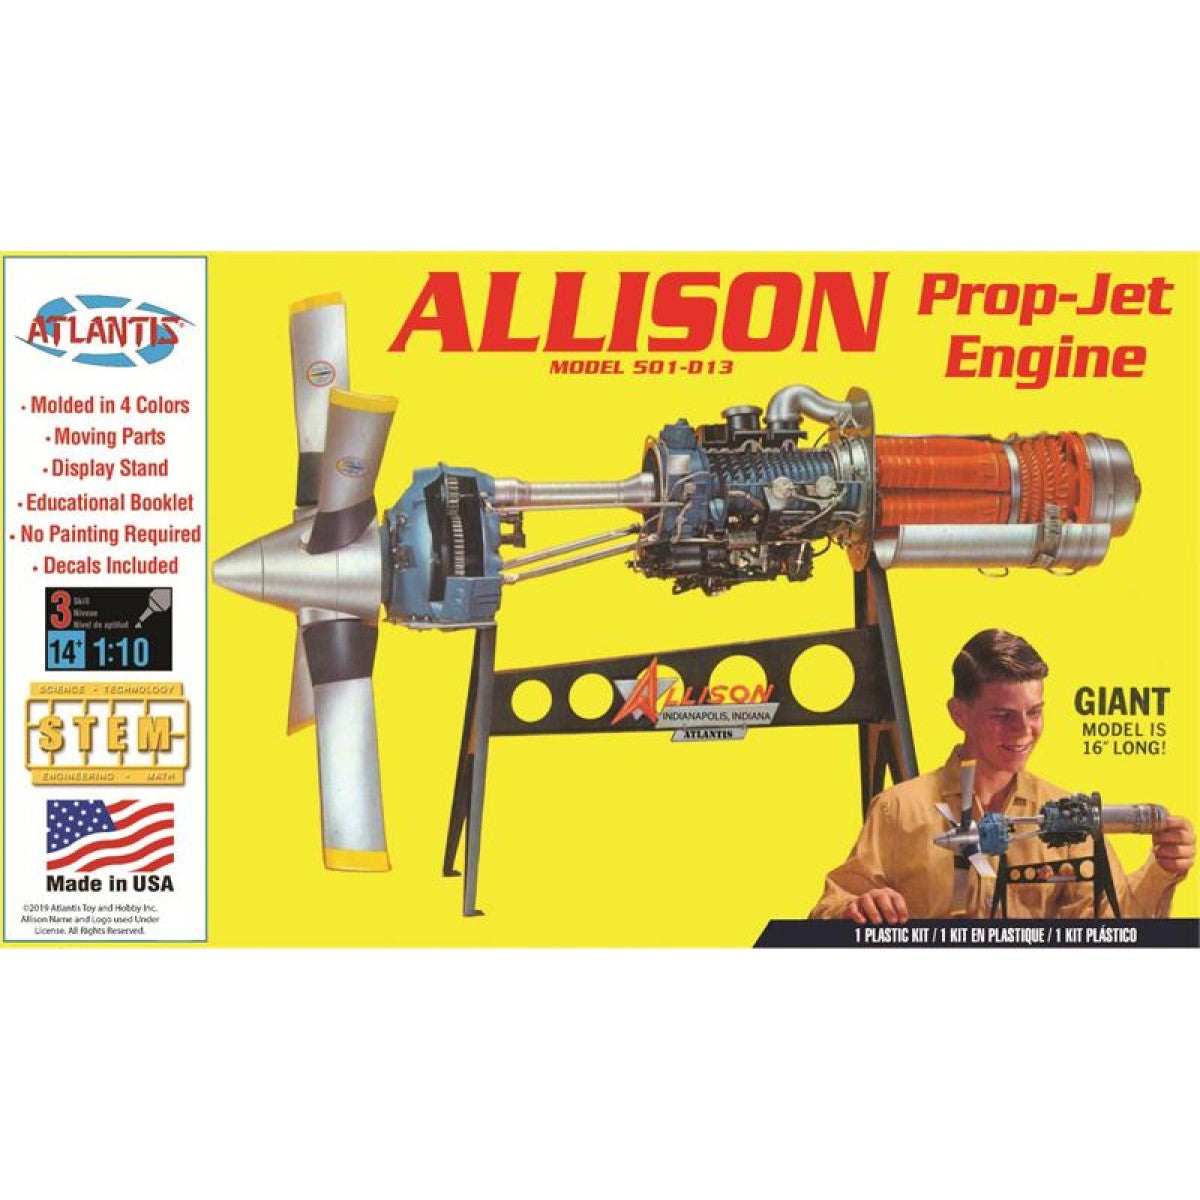 Atlantis 1/10 Allison Model 501-D13 Prop-Jet Engine Plastic Kit H1551